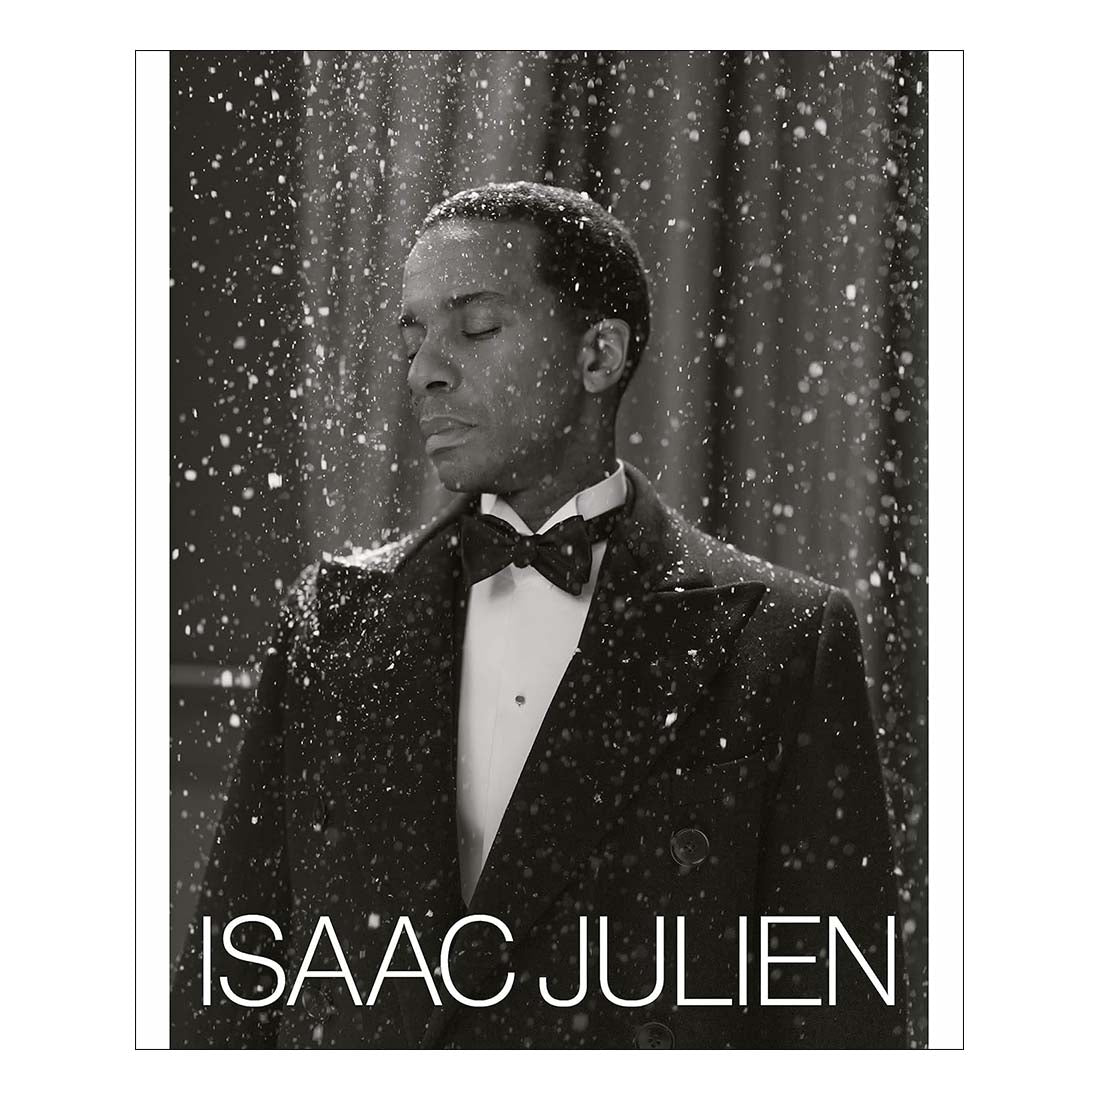 Isaac Julien: His Art and Films